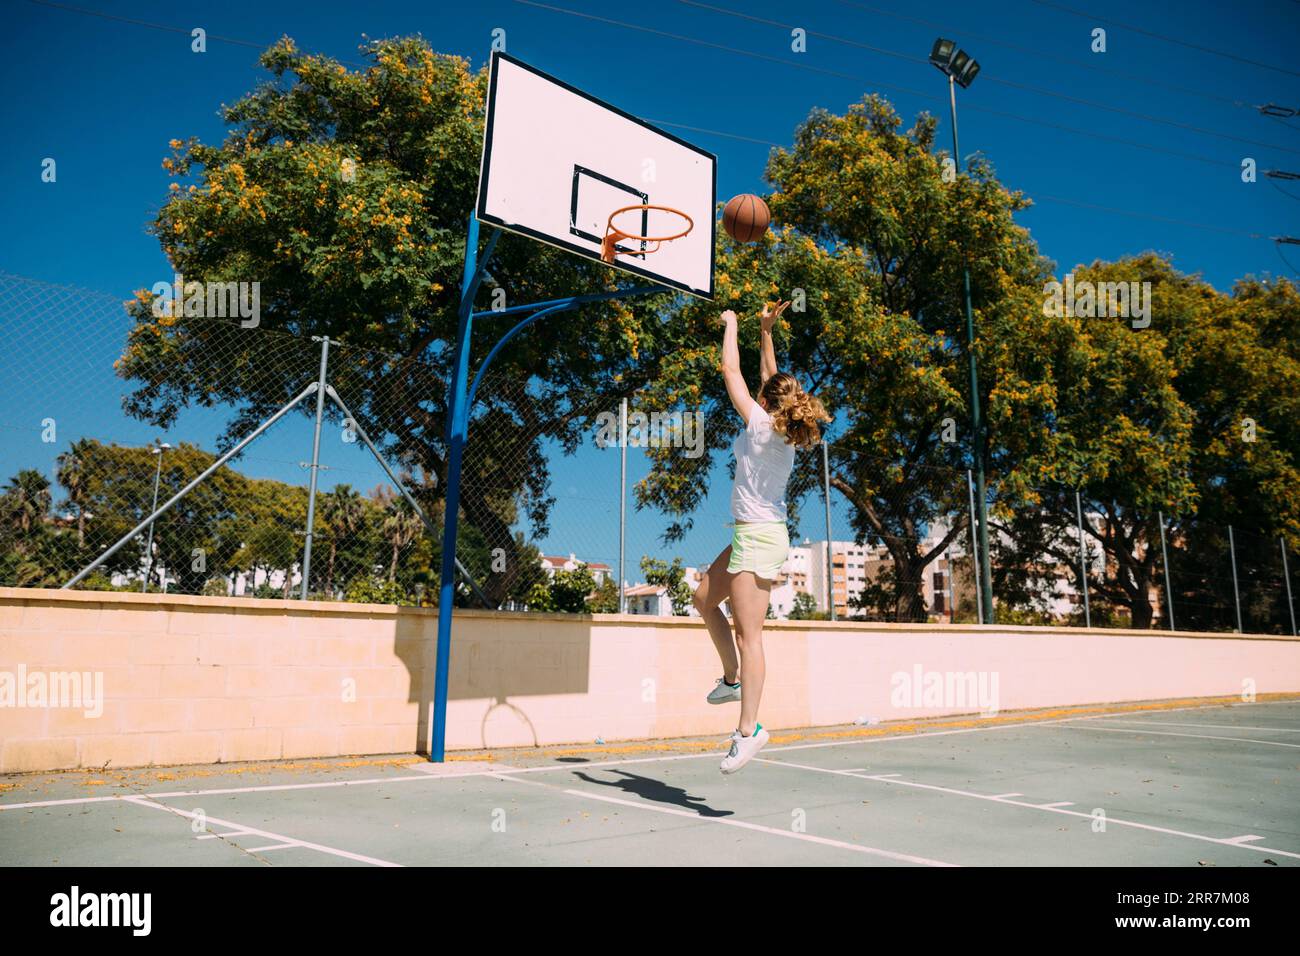 Junge Frau macht Basketballschuss Stockfoto